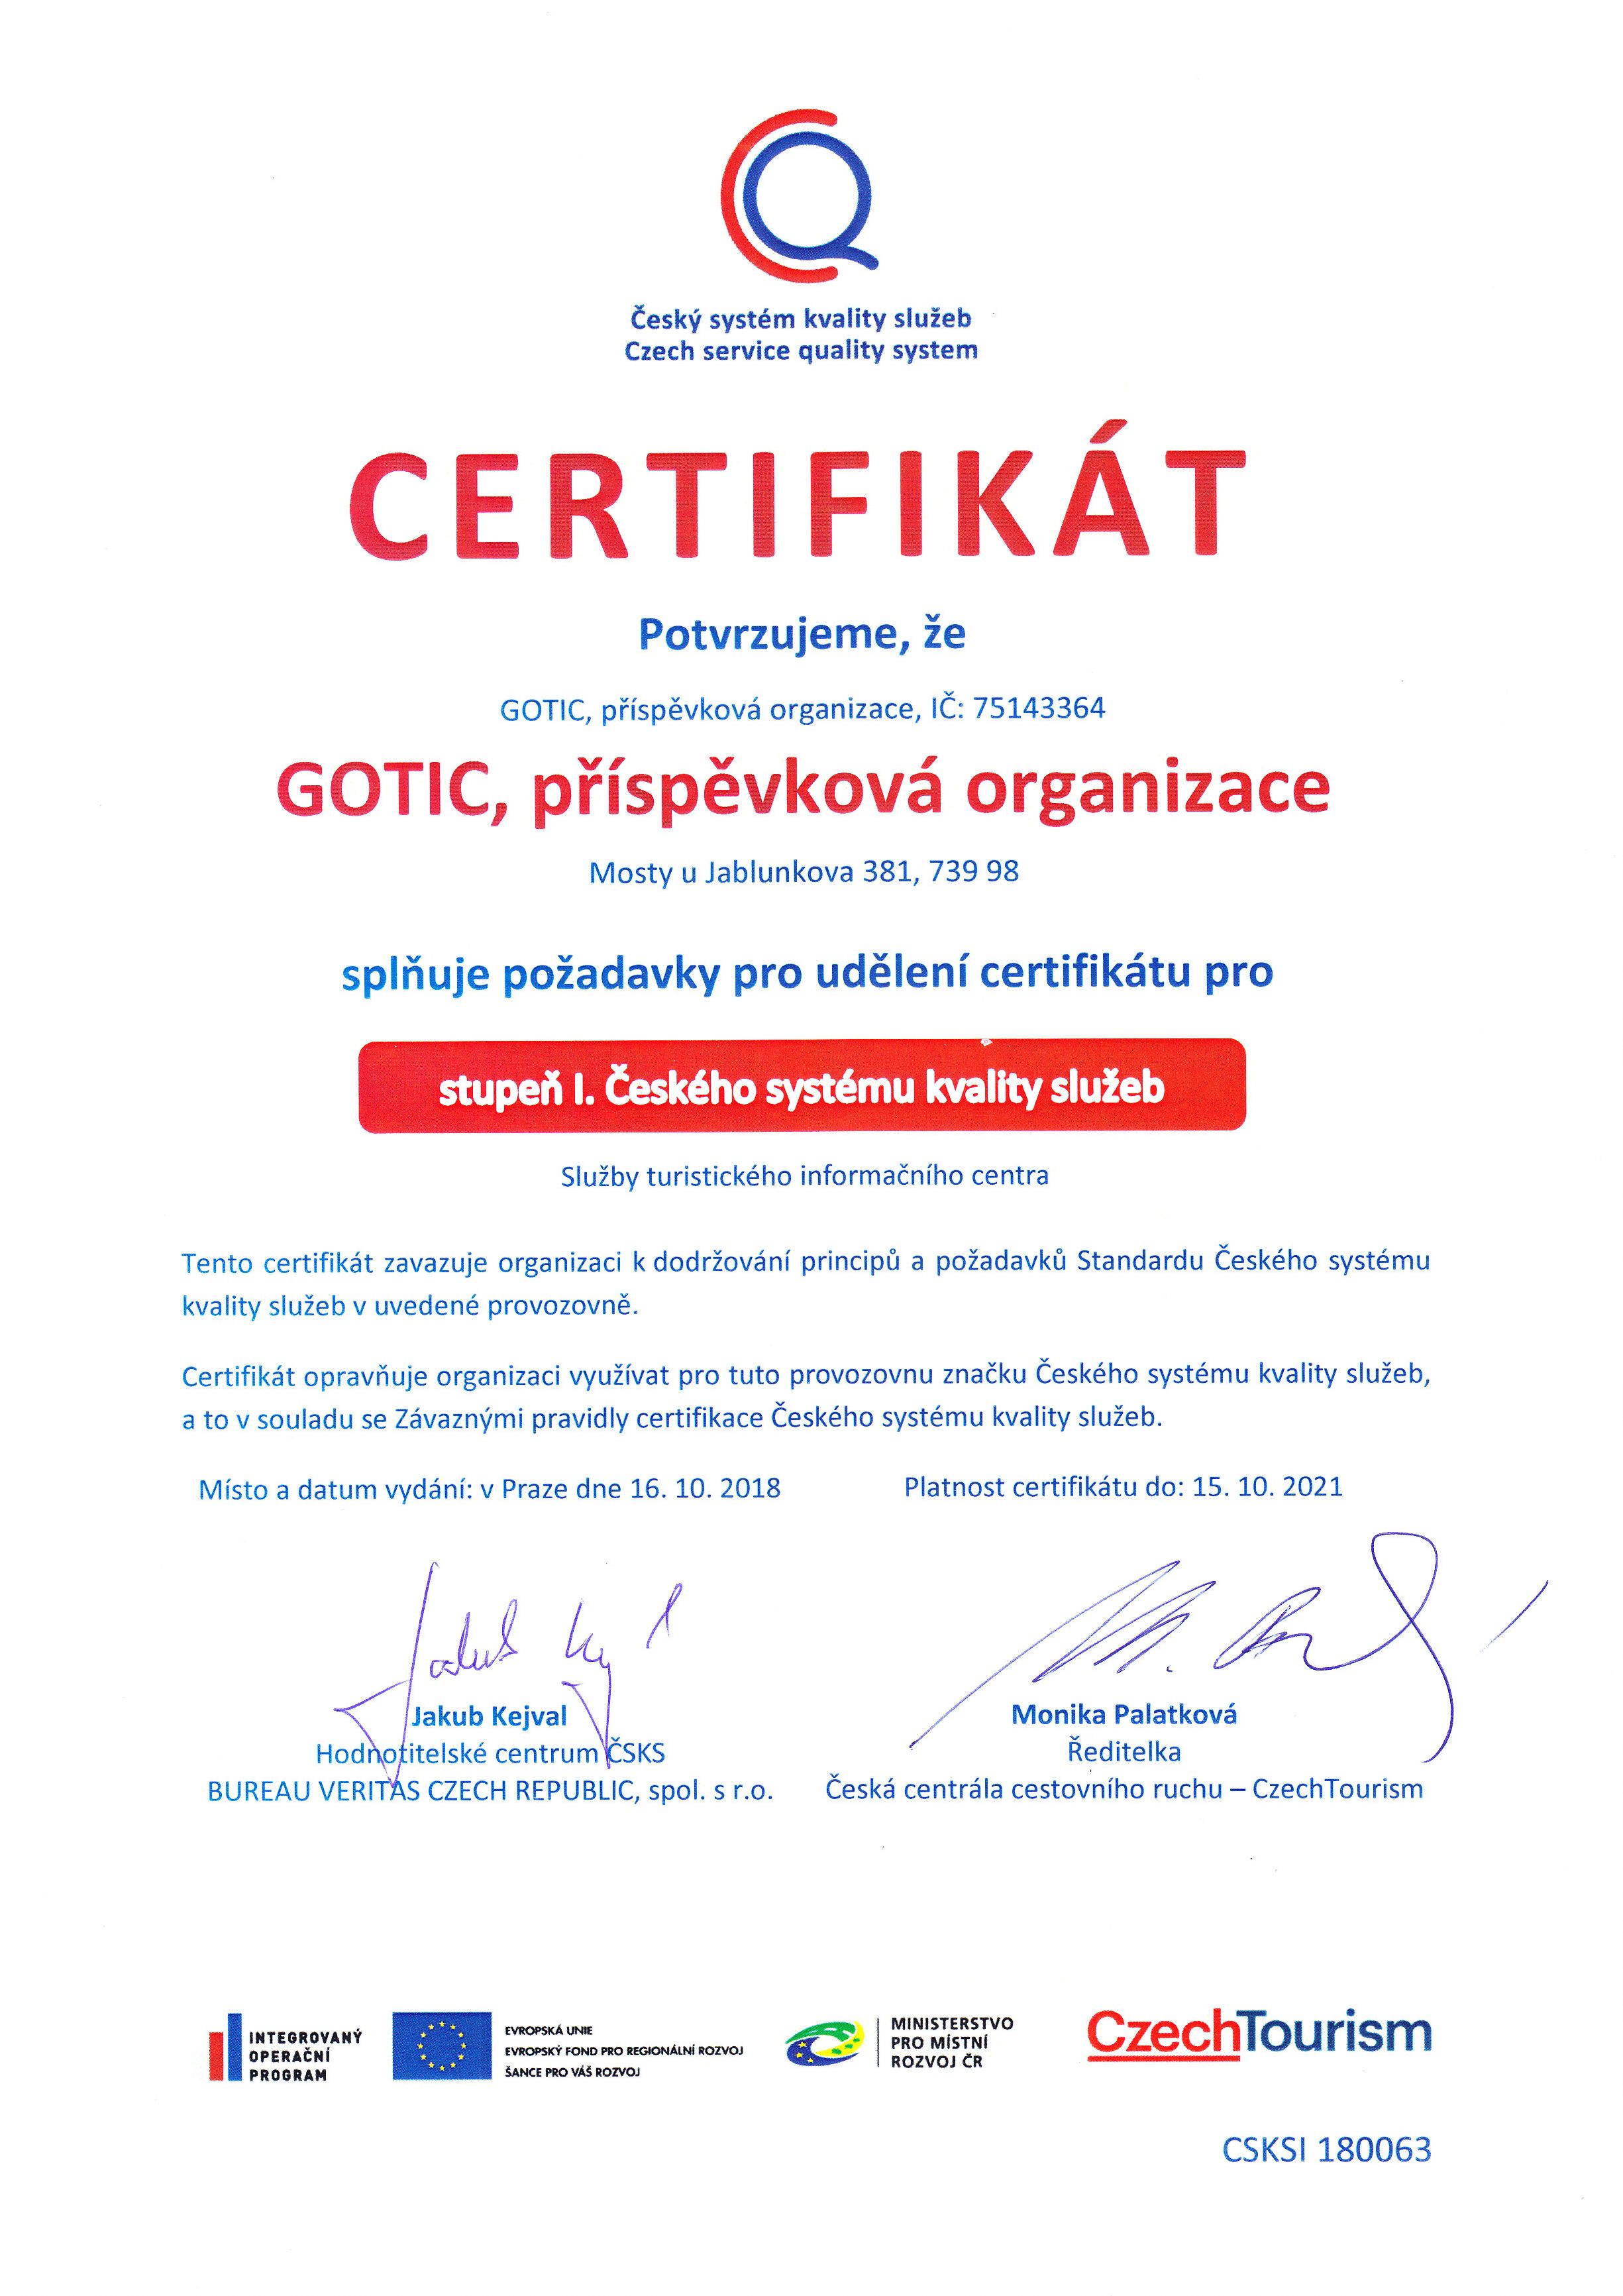 certifikat CSKS 2018 21 m